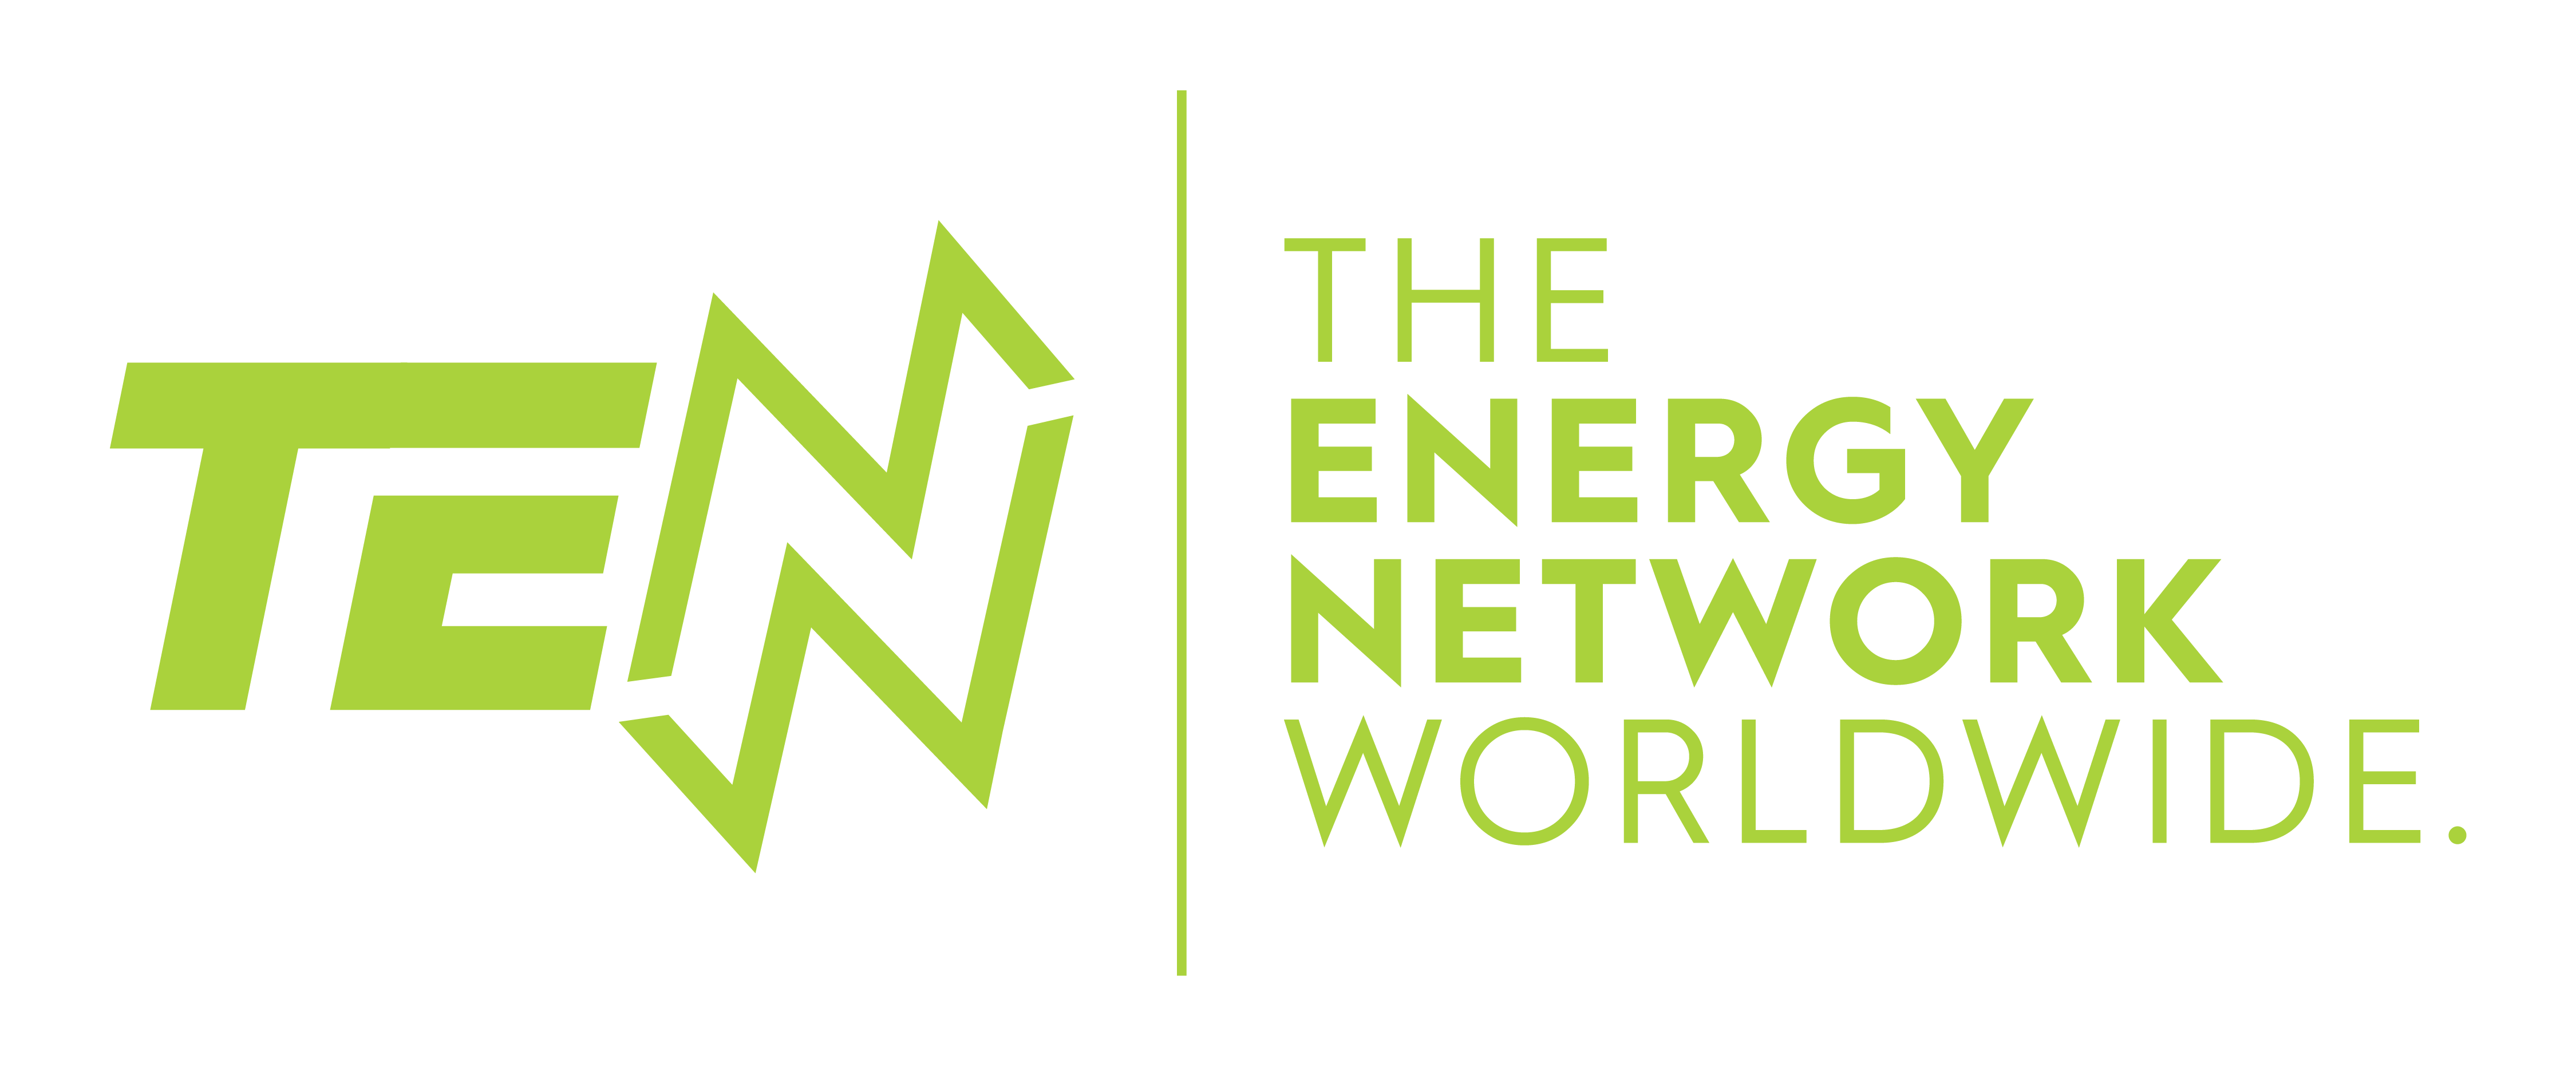 The Energy Network Worldwide company logo